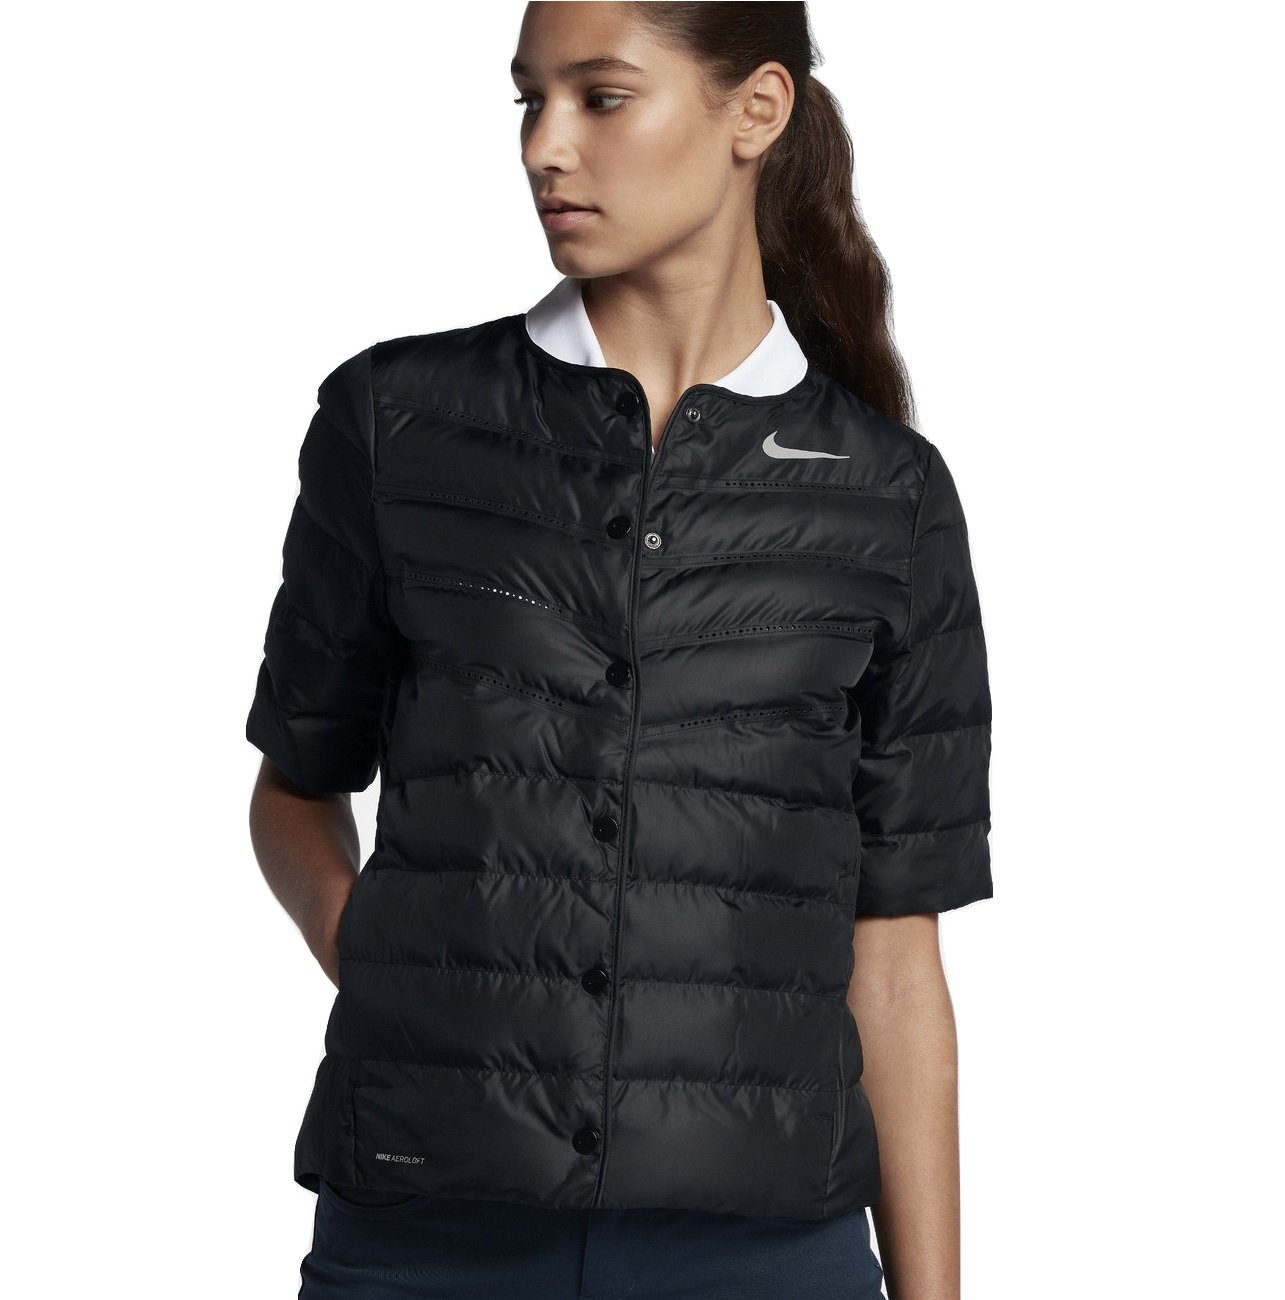 ladies short sleeve windproof golf jacket